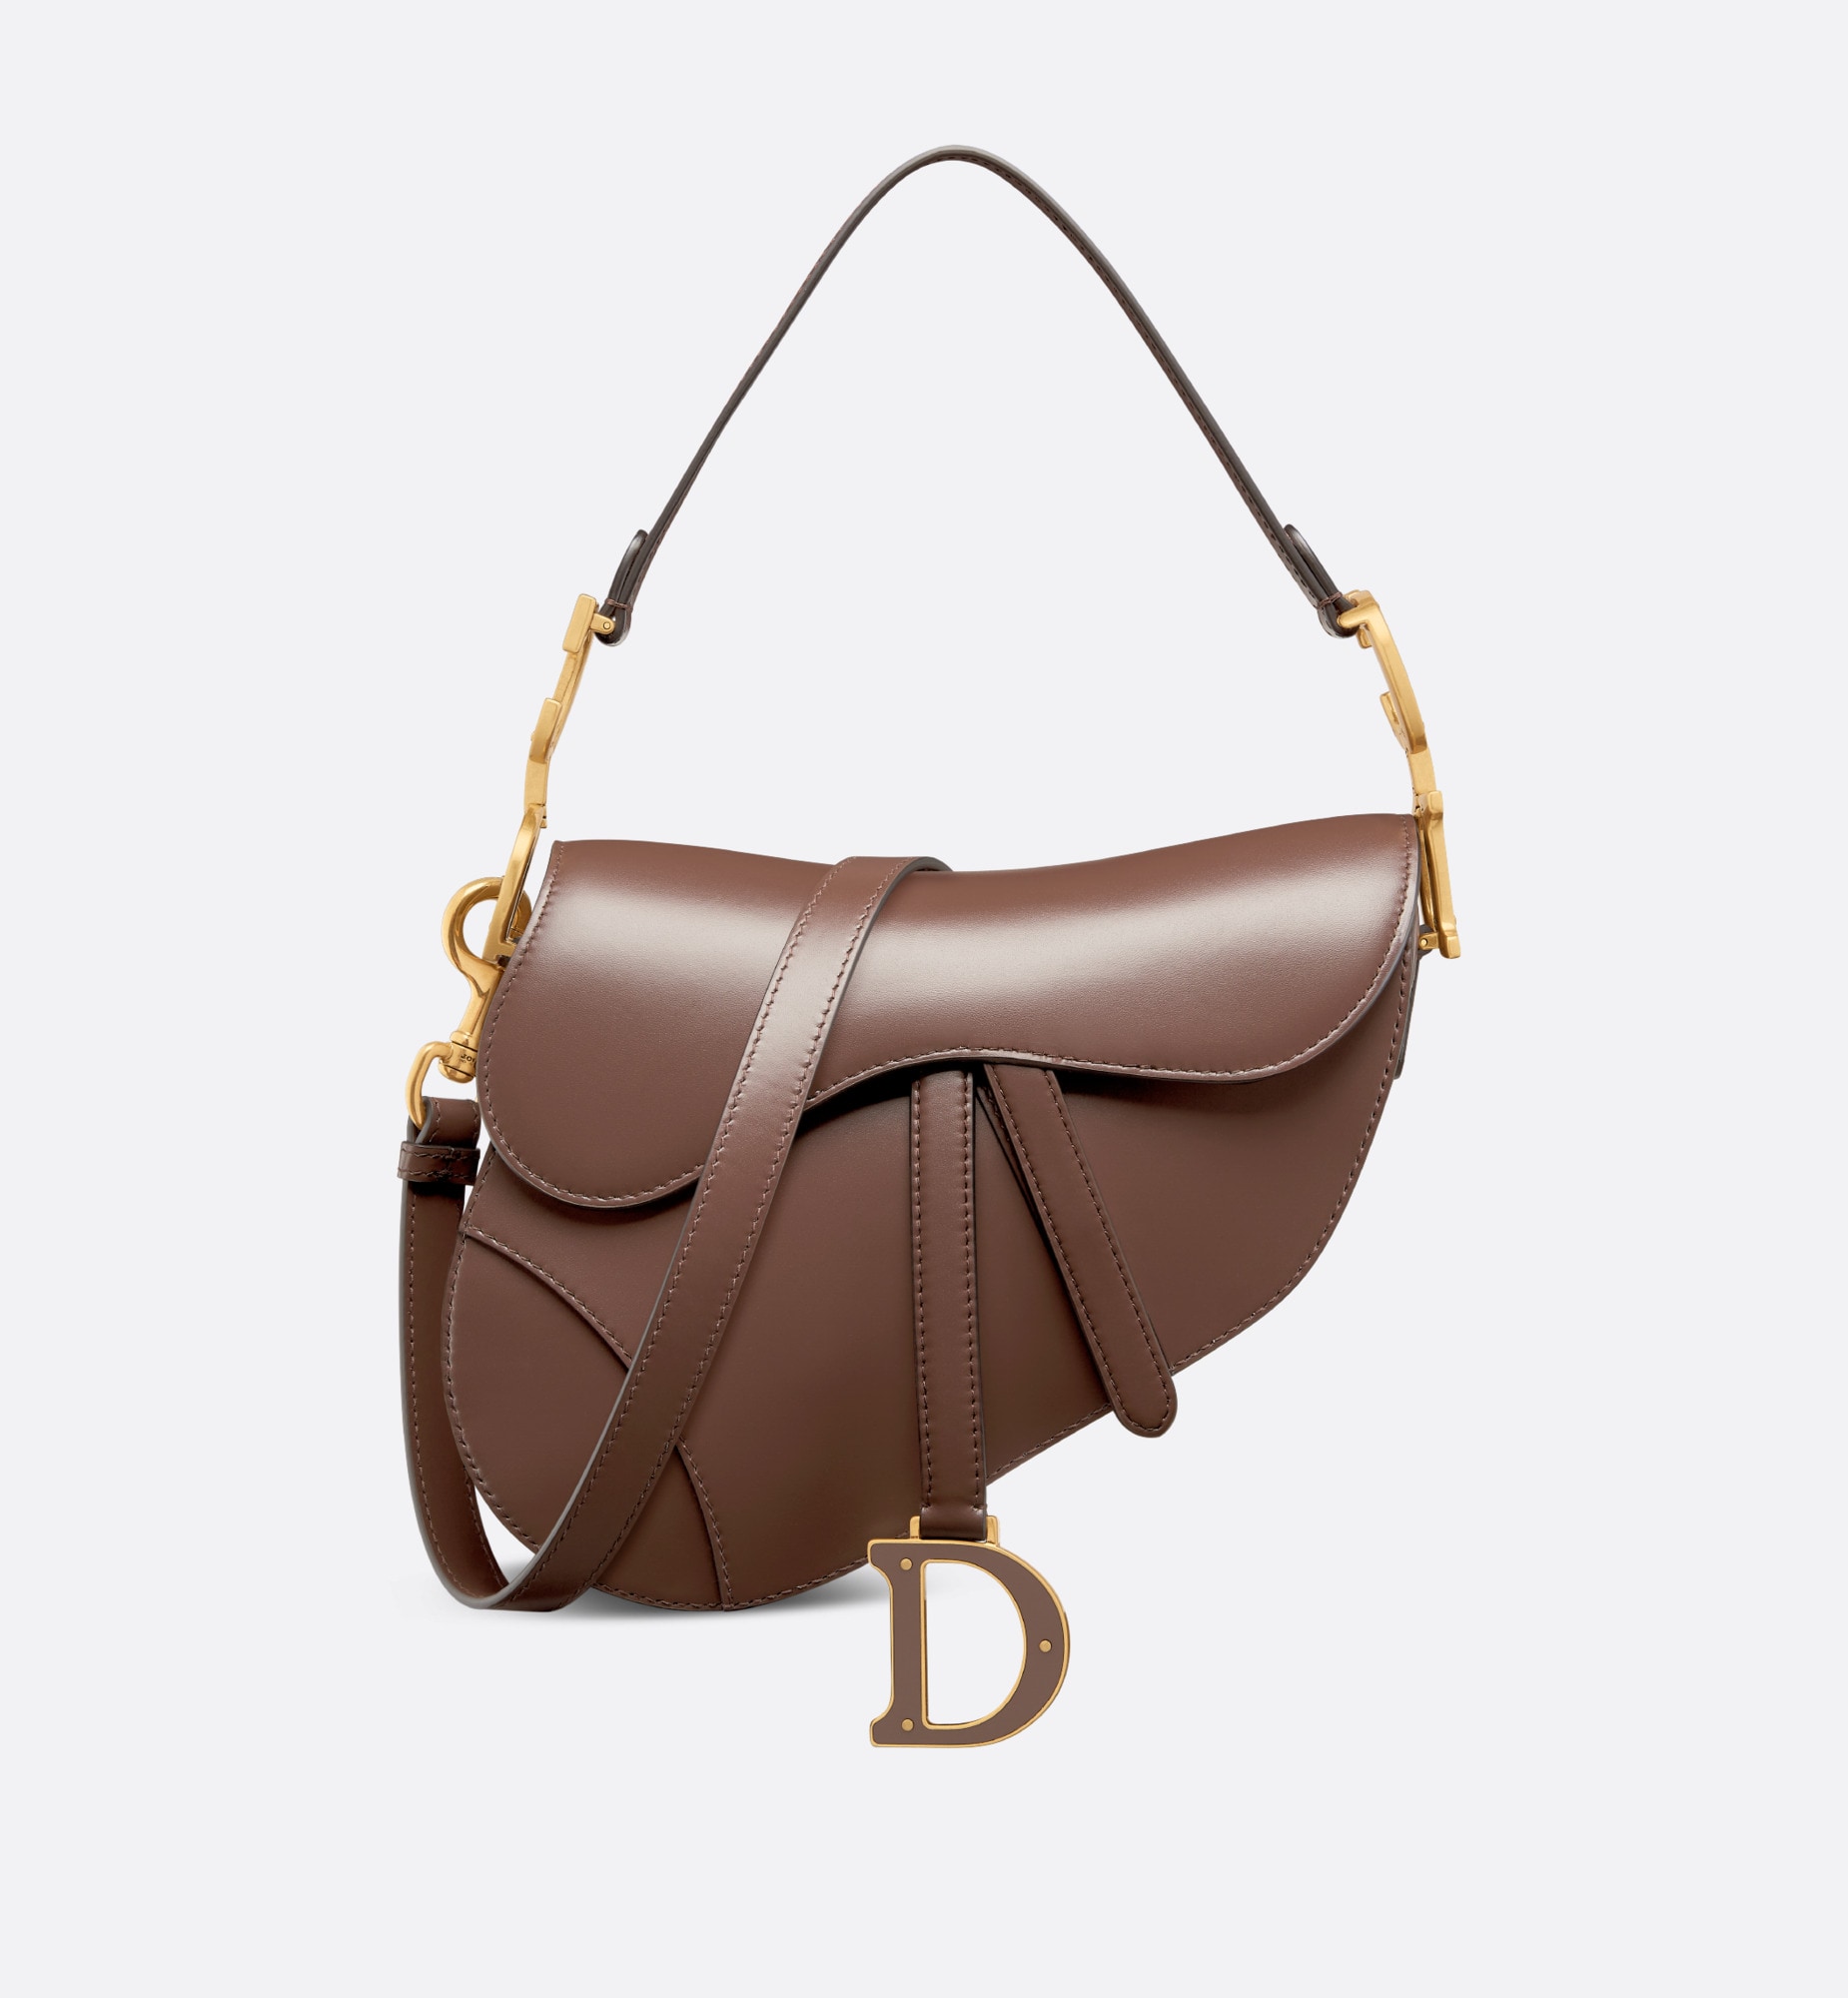 Dior saddle bag with strap chocolate brown smooth calfskin